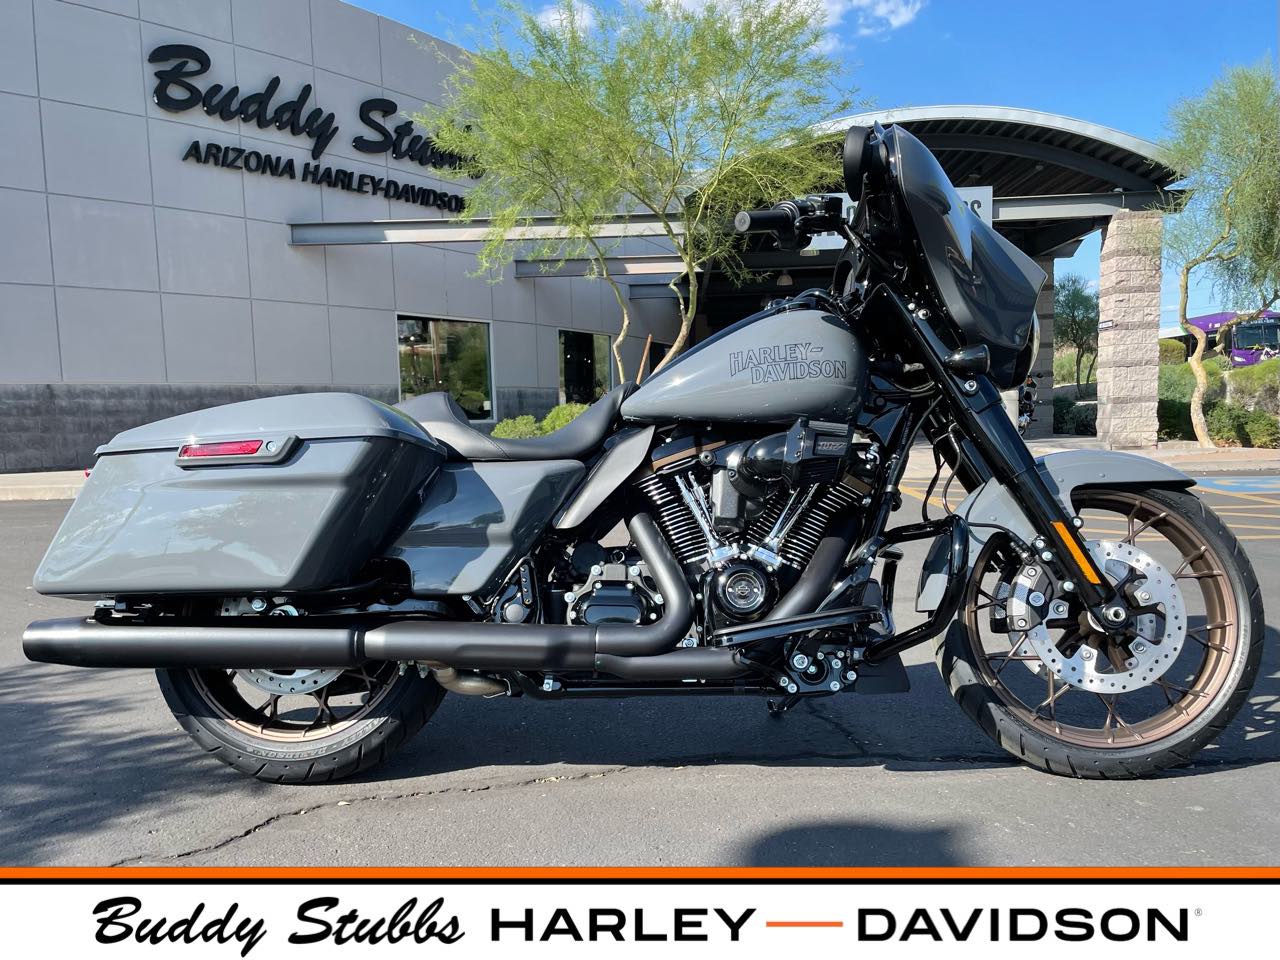 2022 Harley-Davidson Street Glide ST at Buddy Stubbs Arizona Harley-Davidson